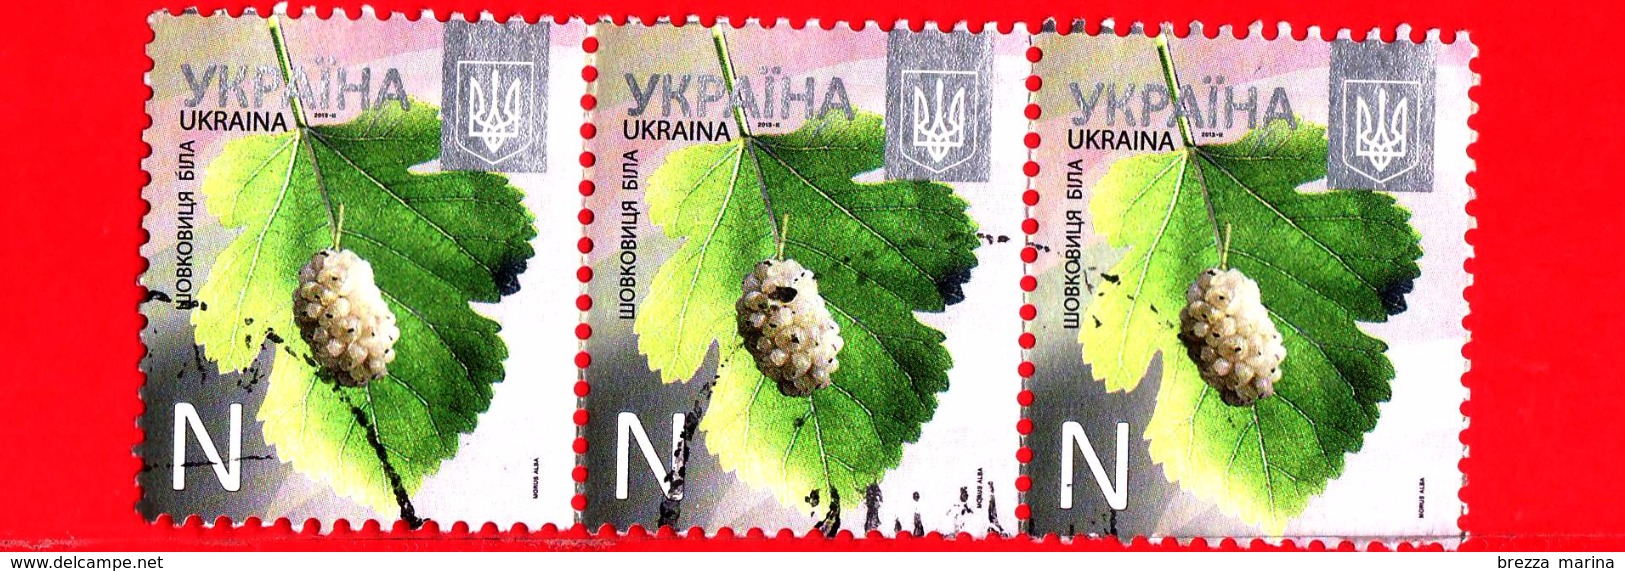 UCRAINA  - Usato - 2013 - Piante - Gelso Bianco - Morus Alba - 2013-II - N - Ukraine